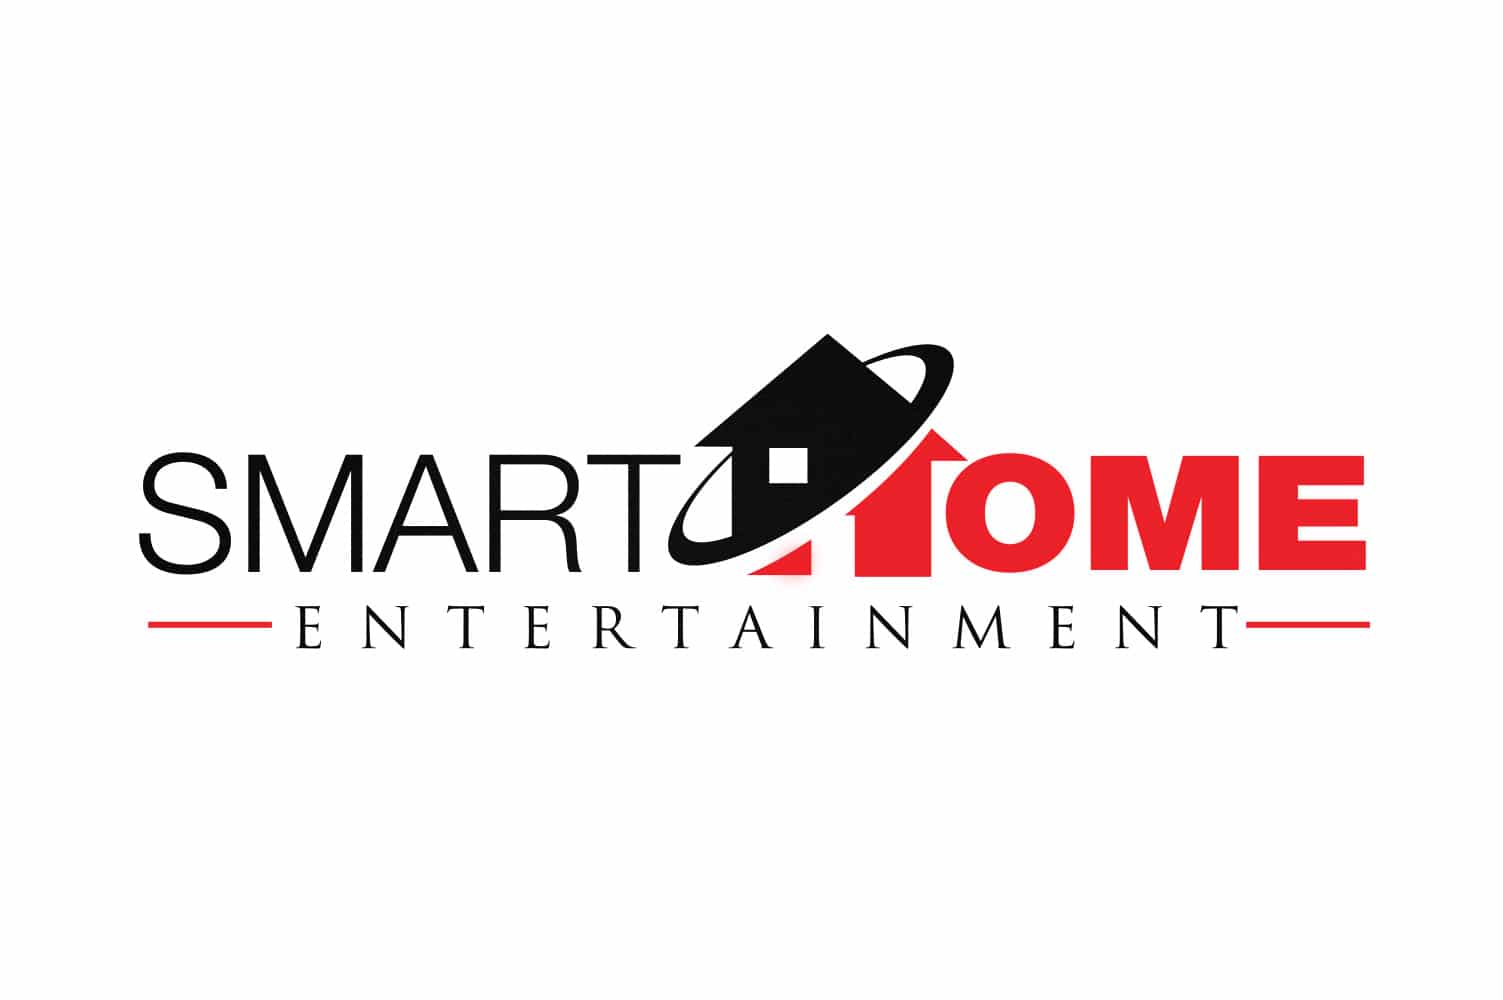 Home Entertainment Logo - Smart Home Entertainment Logo Design - JellyFlea Creative